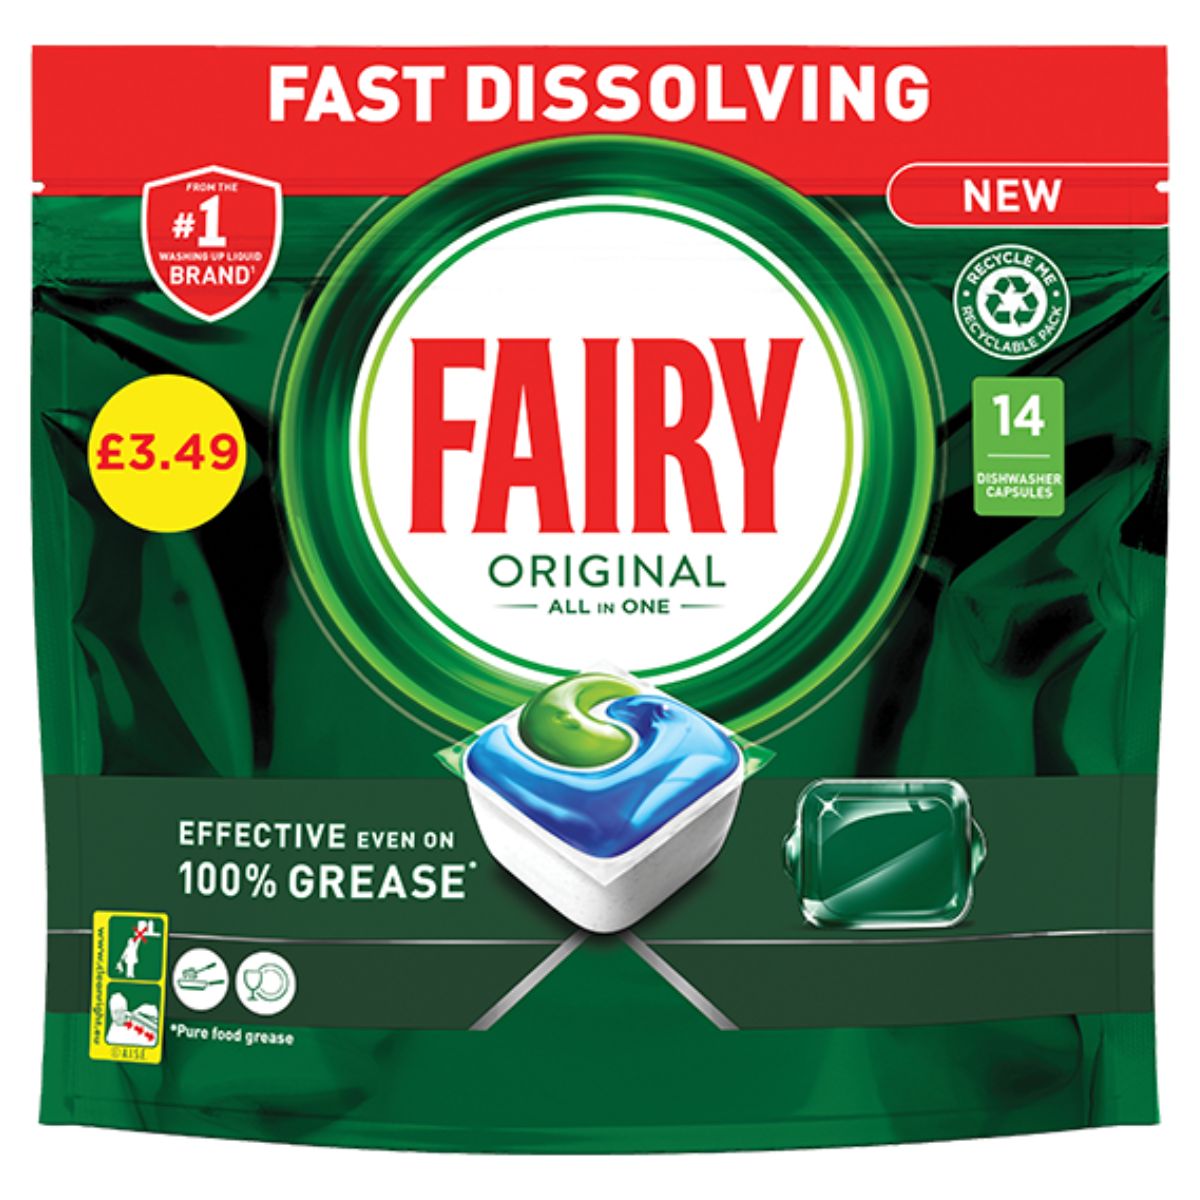 Fairy - All In One Orig Dishwasher - 14 Tablets original fast displacing dishwashing liquid.